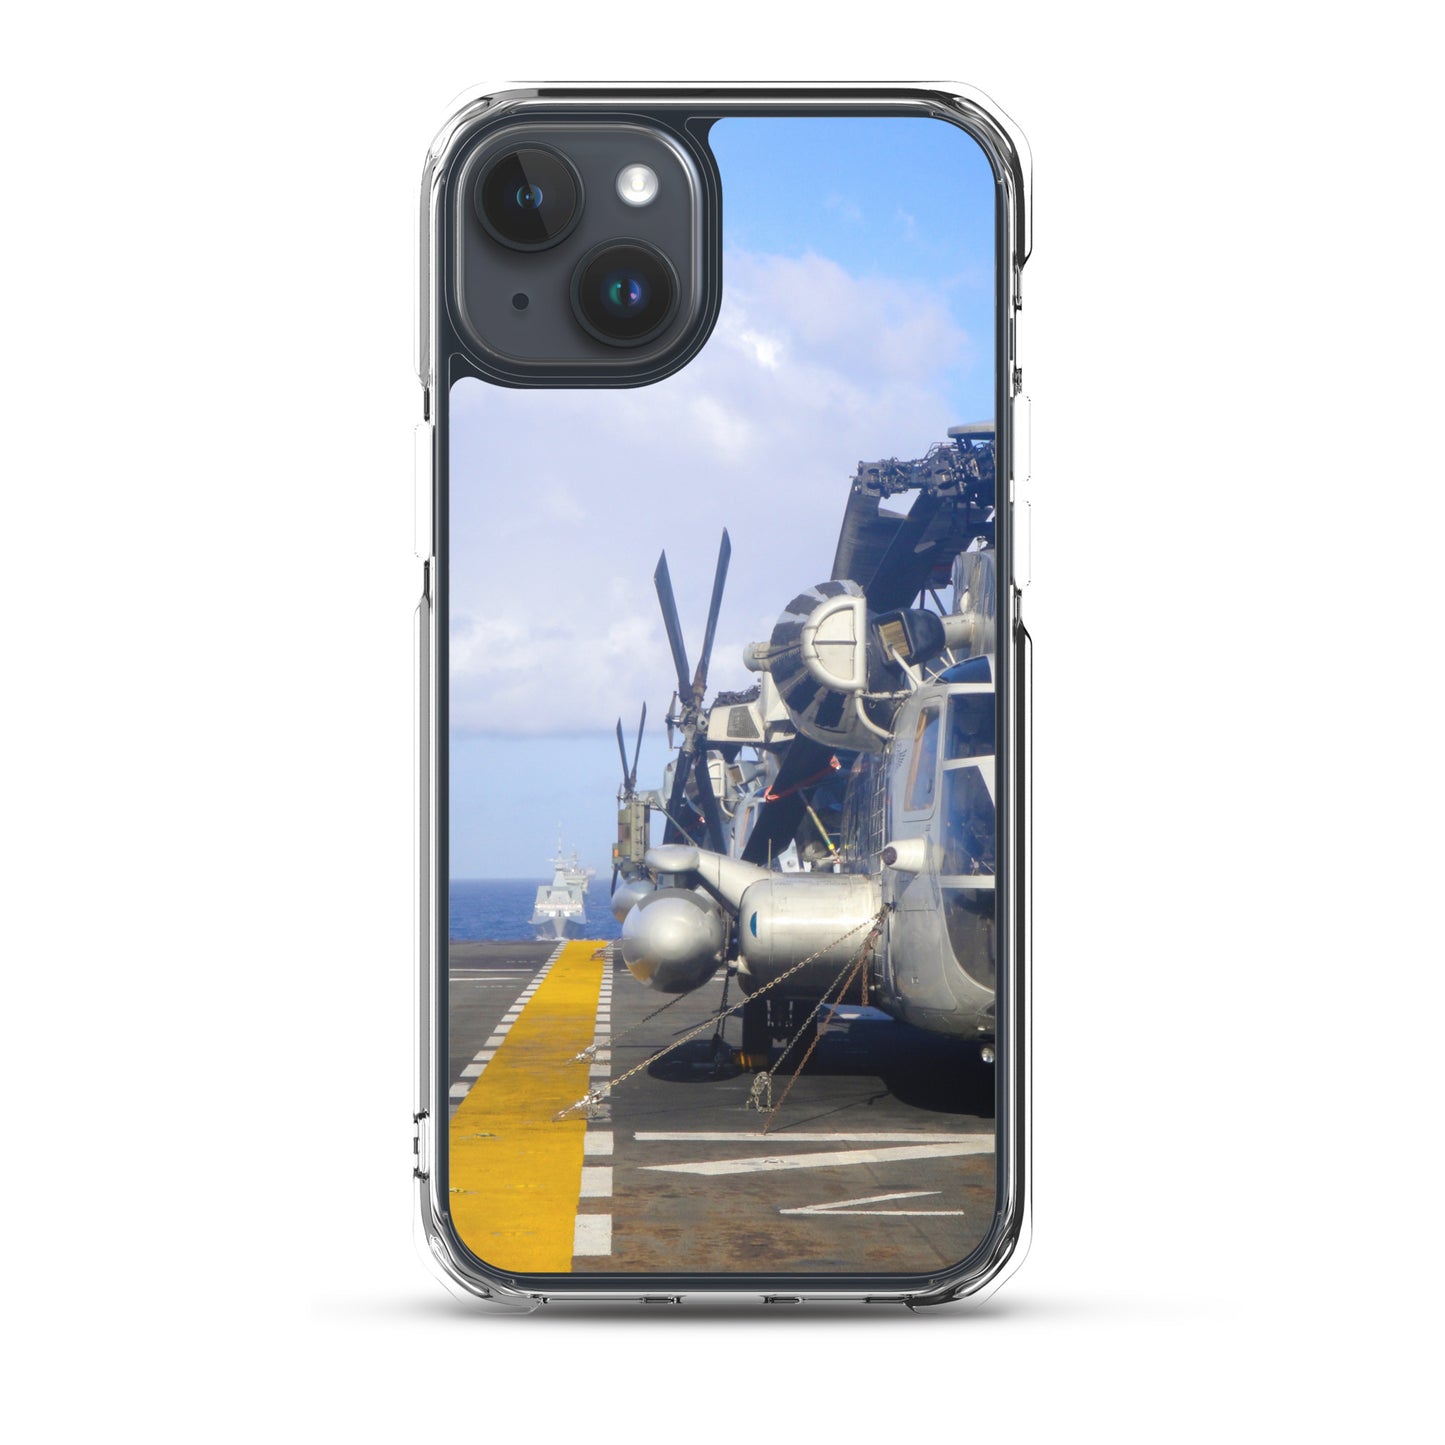 Flight Deck Views (iPhone Case)